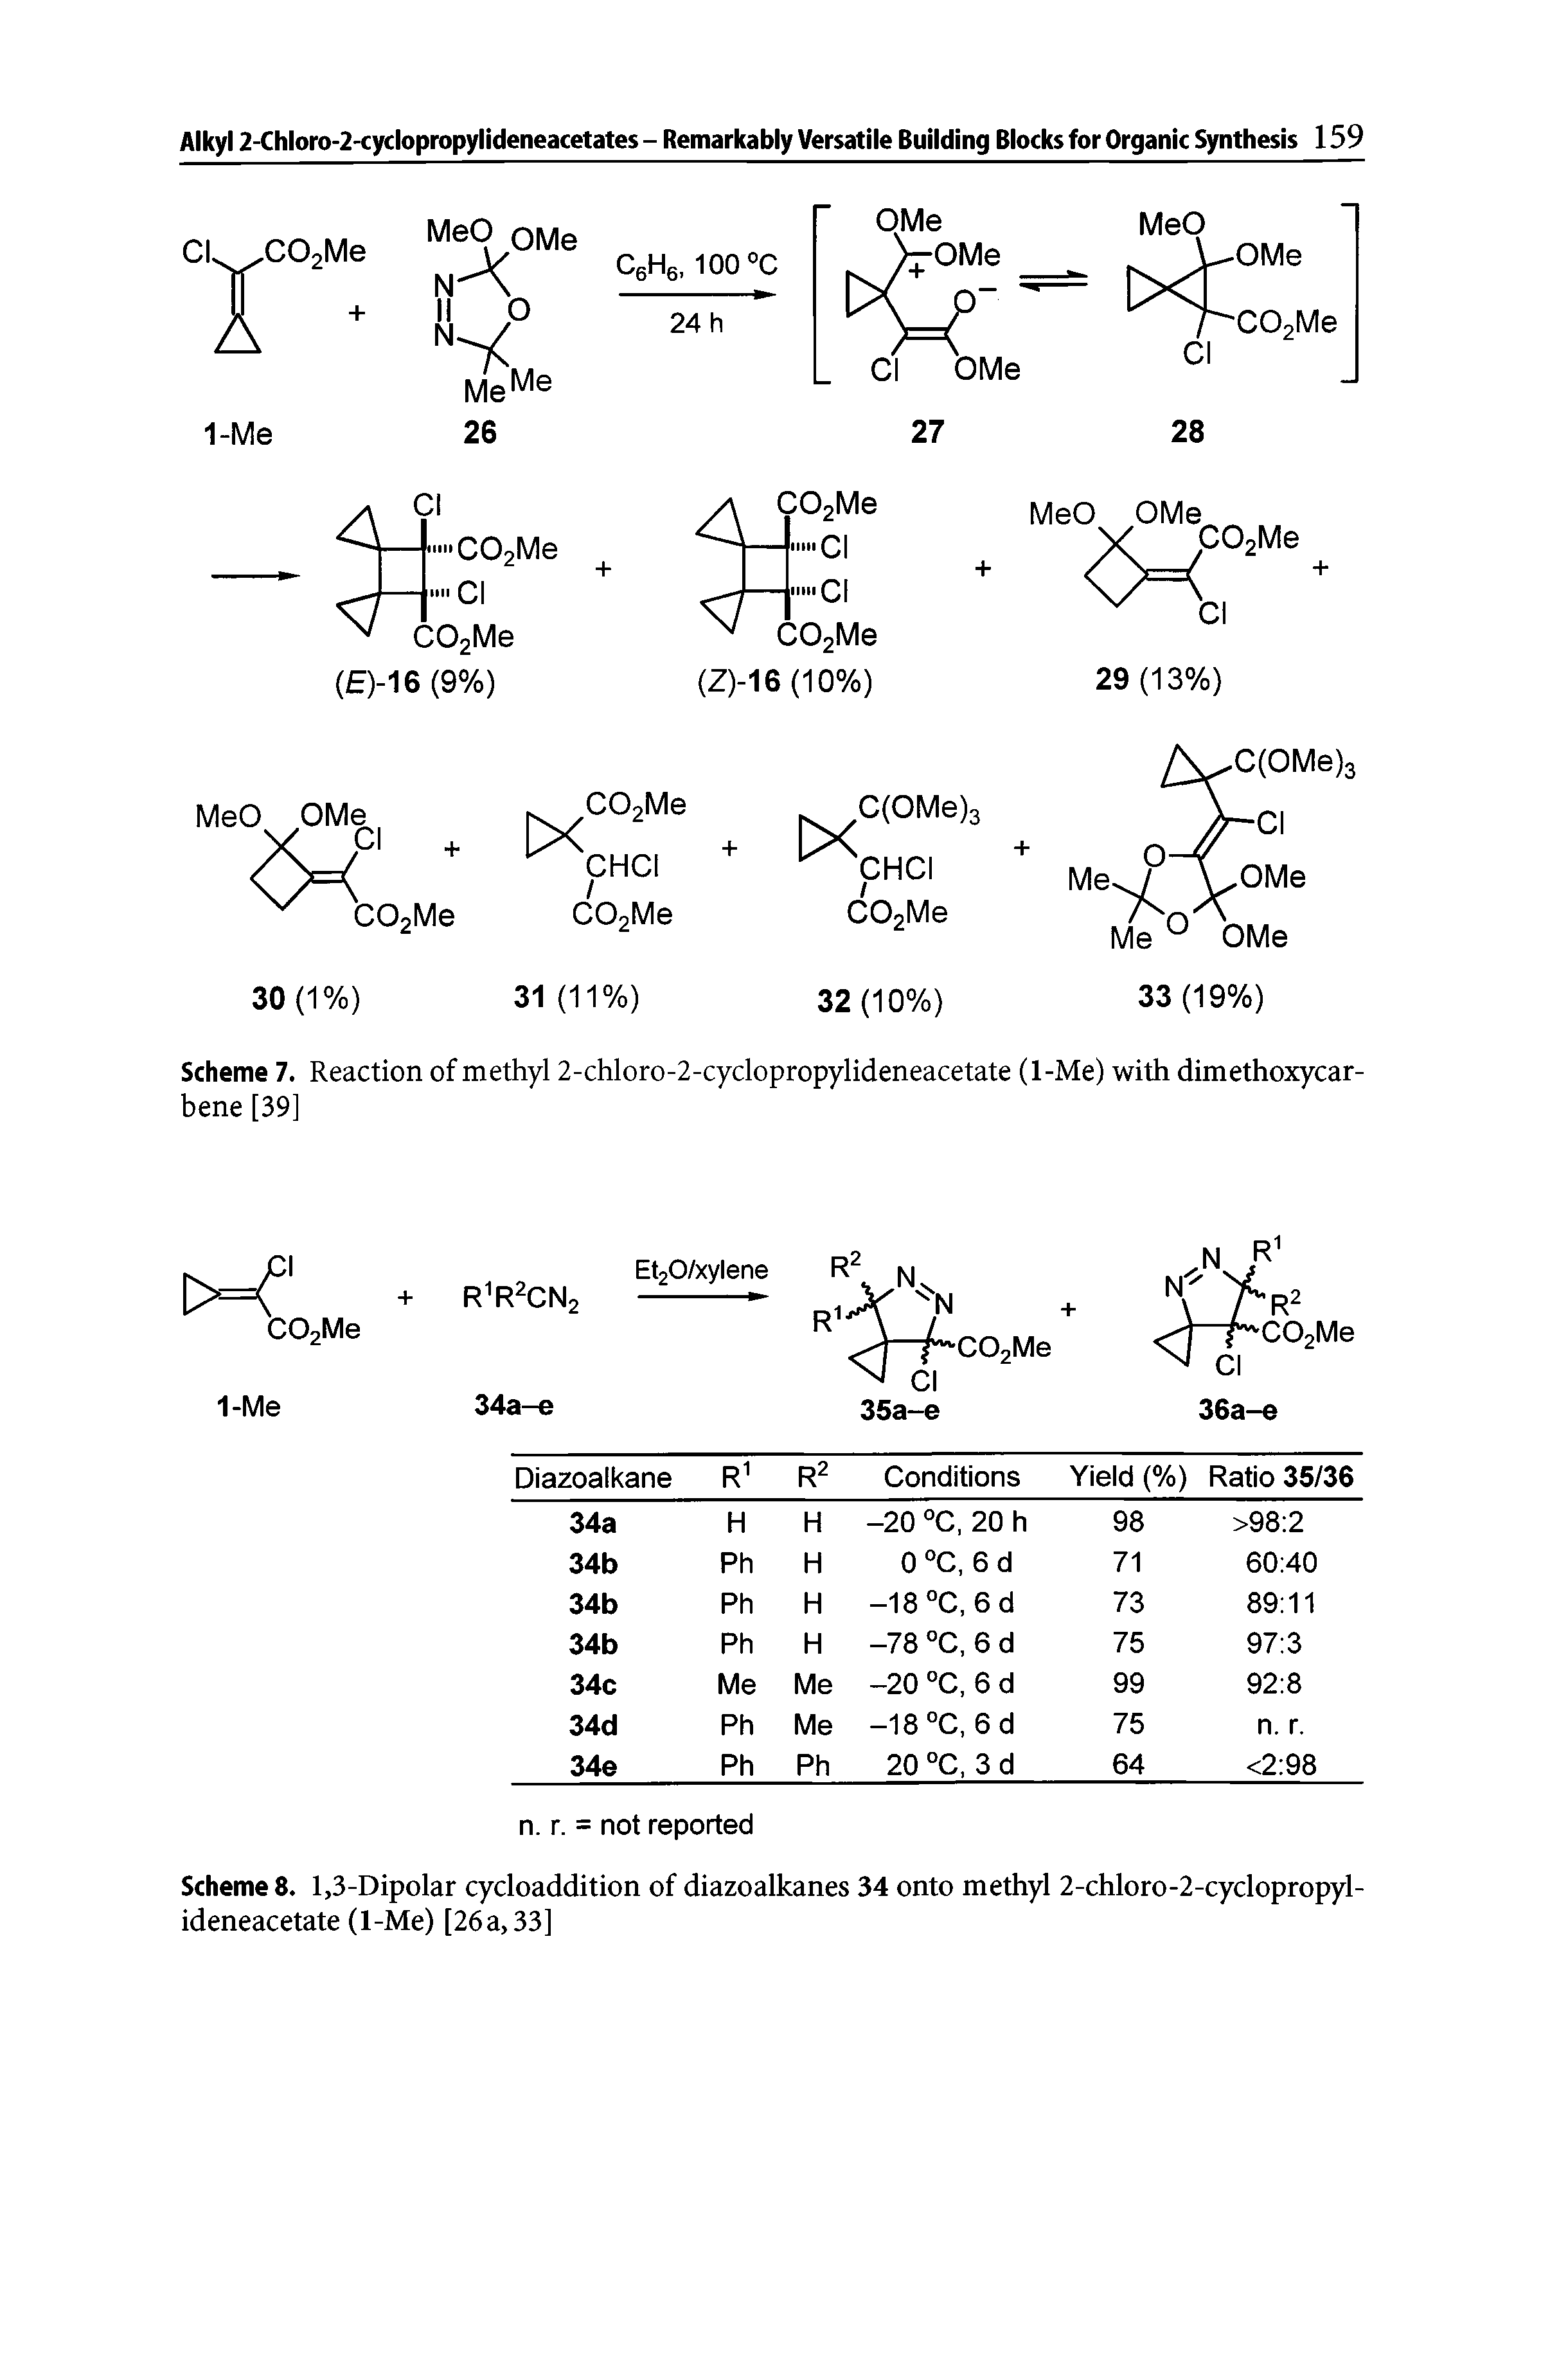 Scheme 7. Reaction of methyl 2-chloro-2-cyclopropylideneacetate (1-Me) with dimethoxycar-bene [39]...